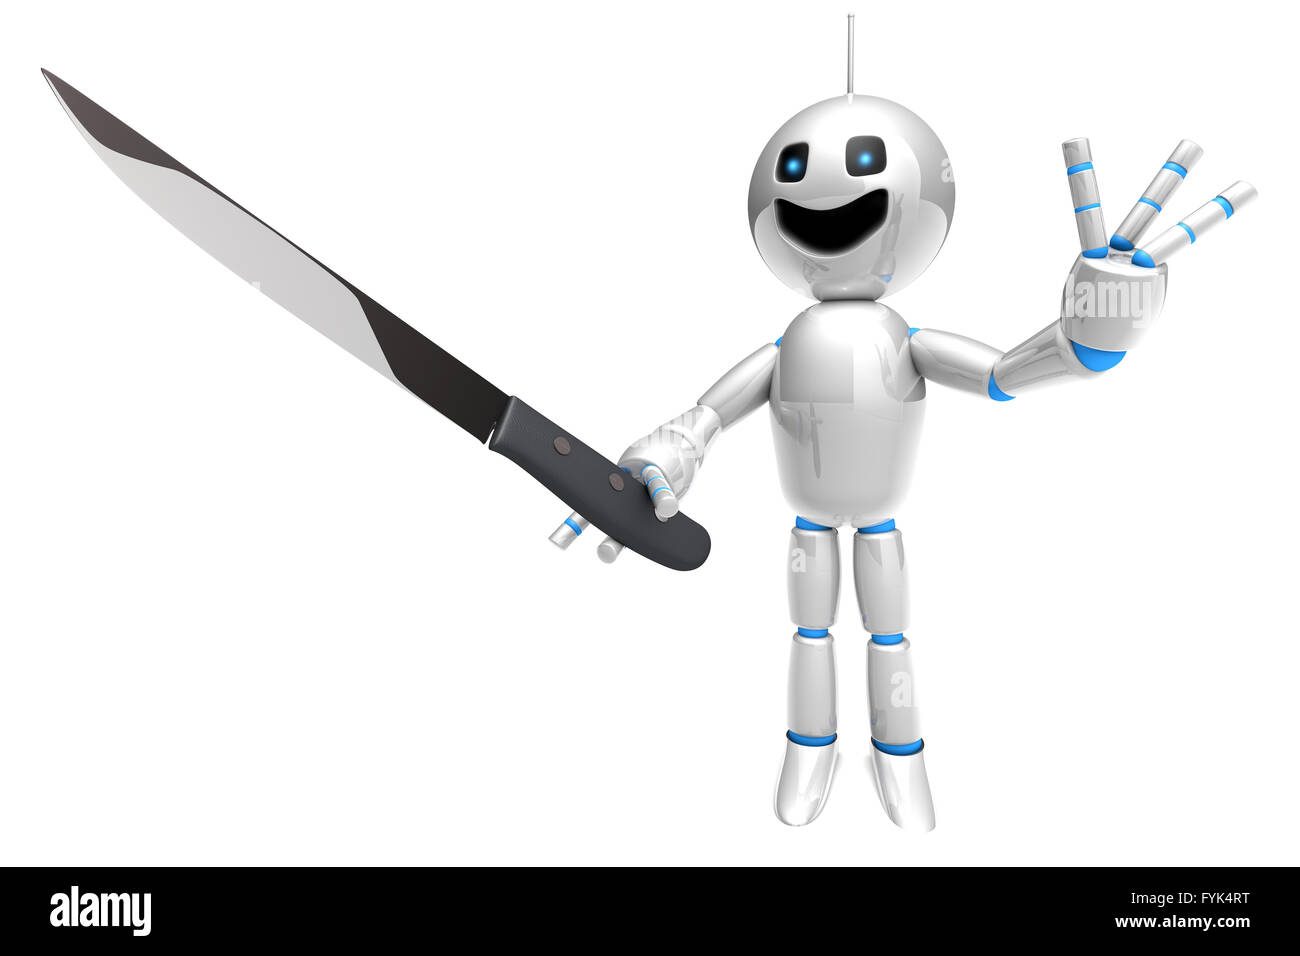 Cartoon Robot with a kitchen Knife Stock Photo - Alamy